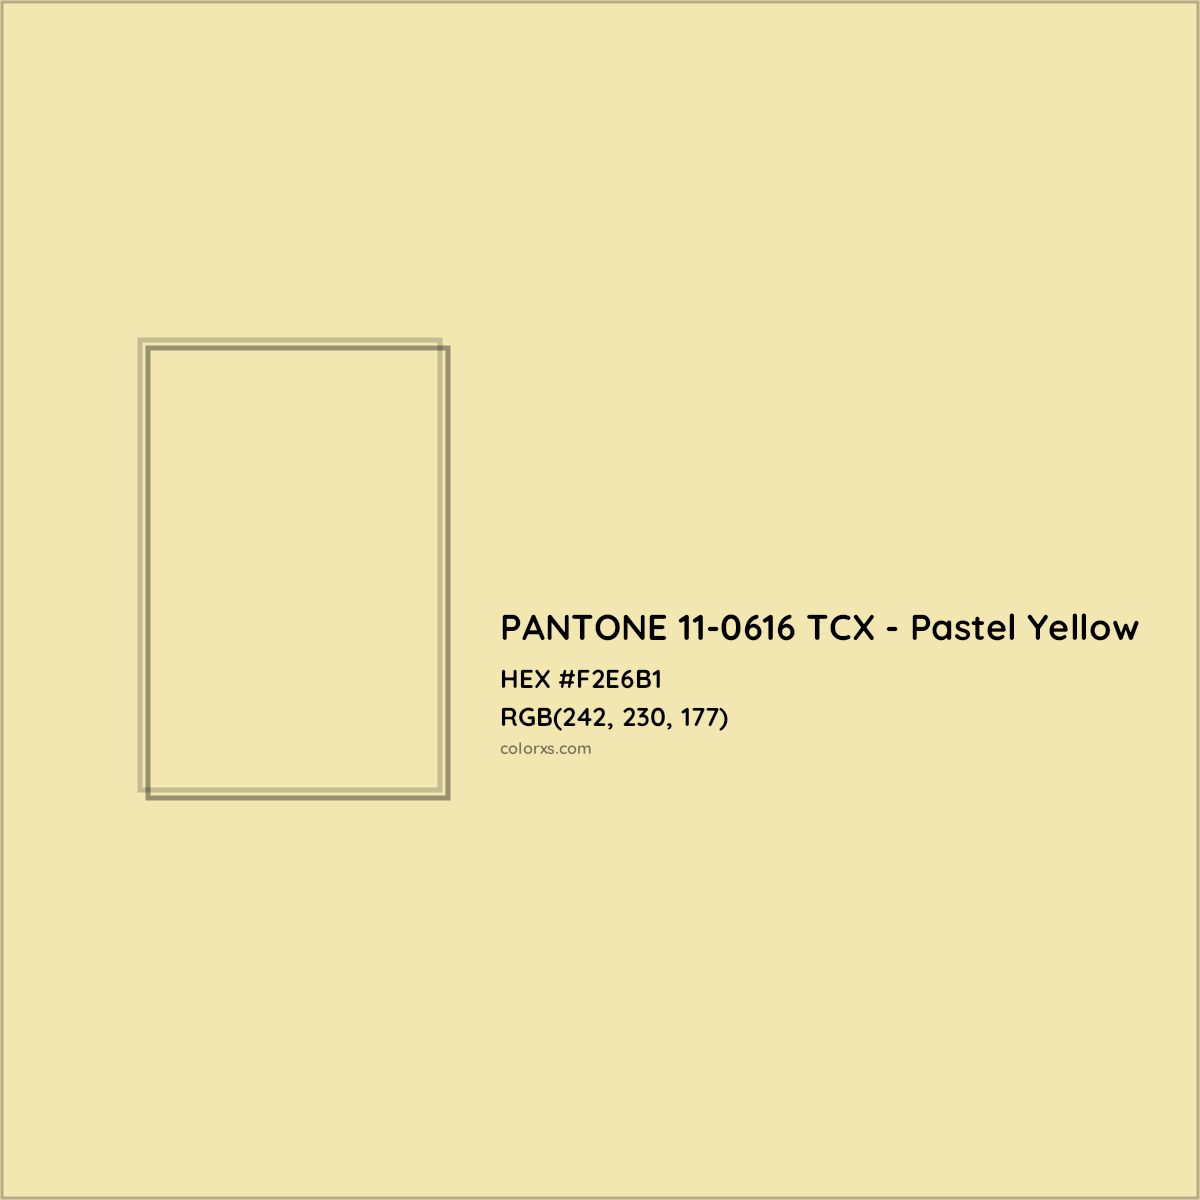 HEX #F2E6B1 PANTONE 11-0616 TCX - Pastel Yellow CMS Pantone TCX - Color Code